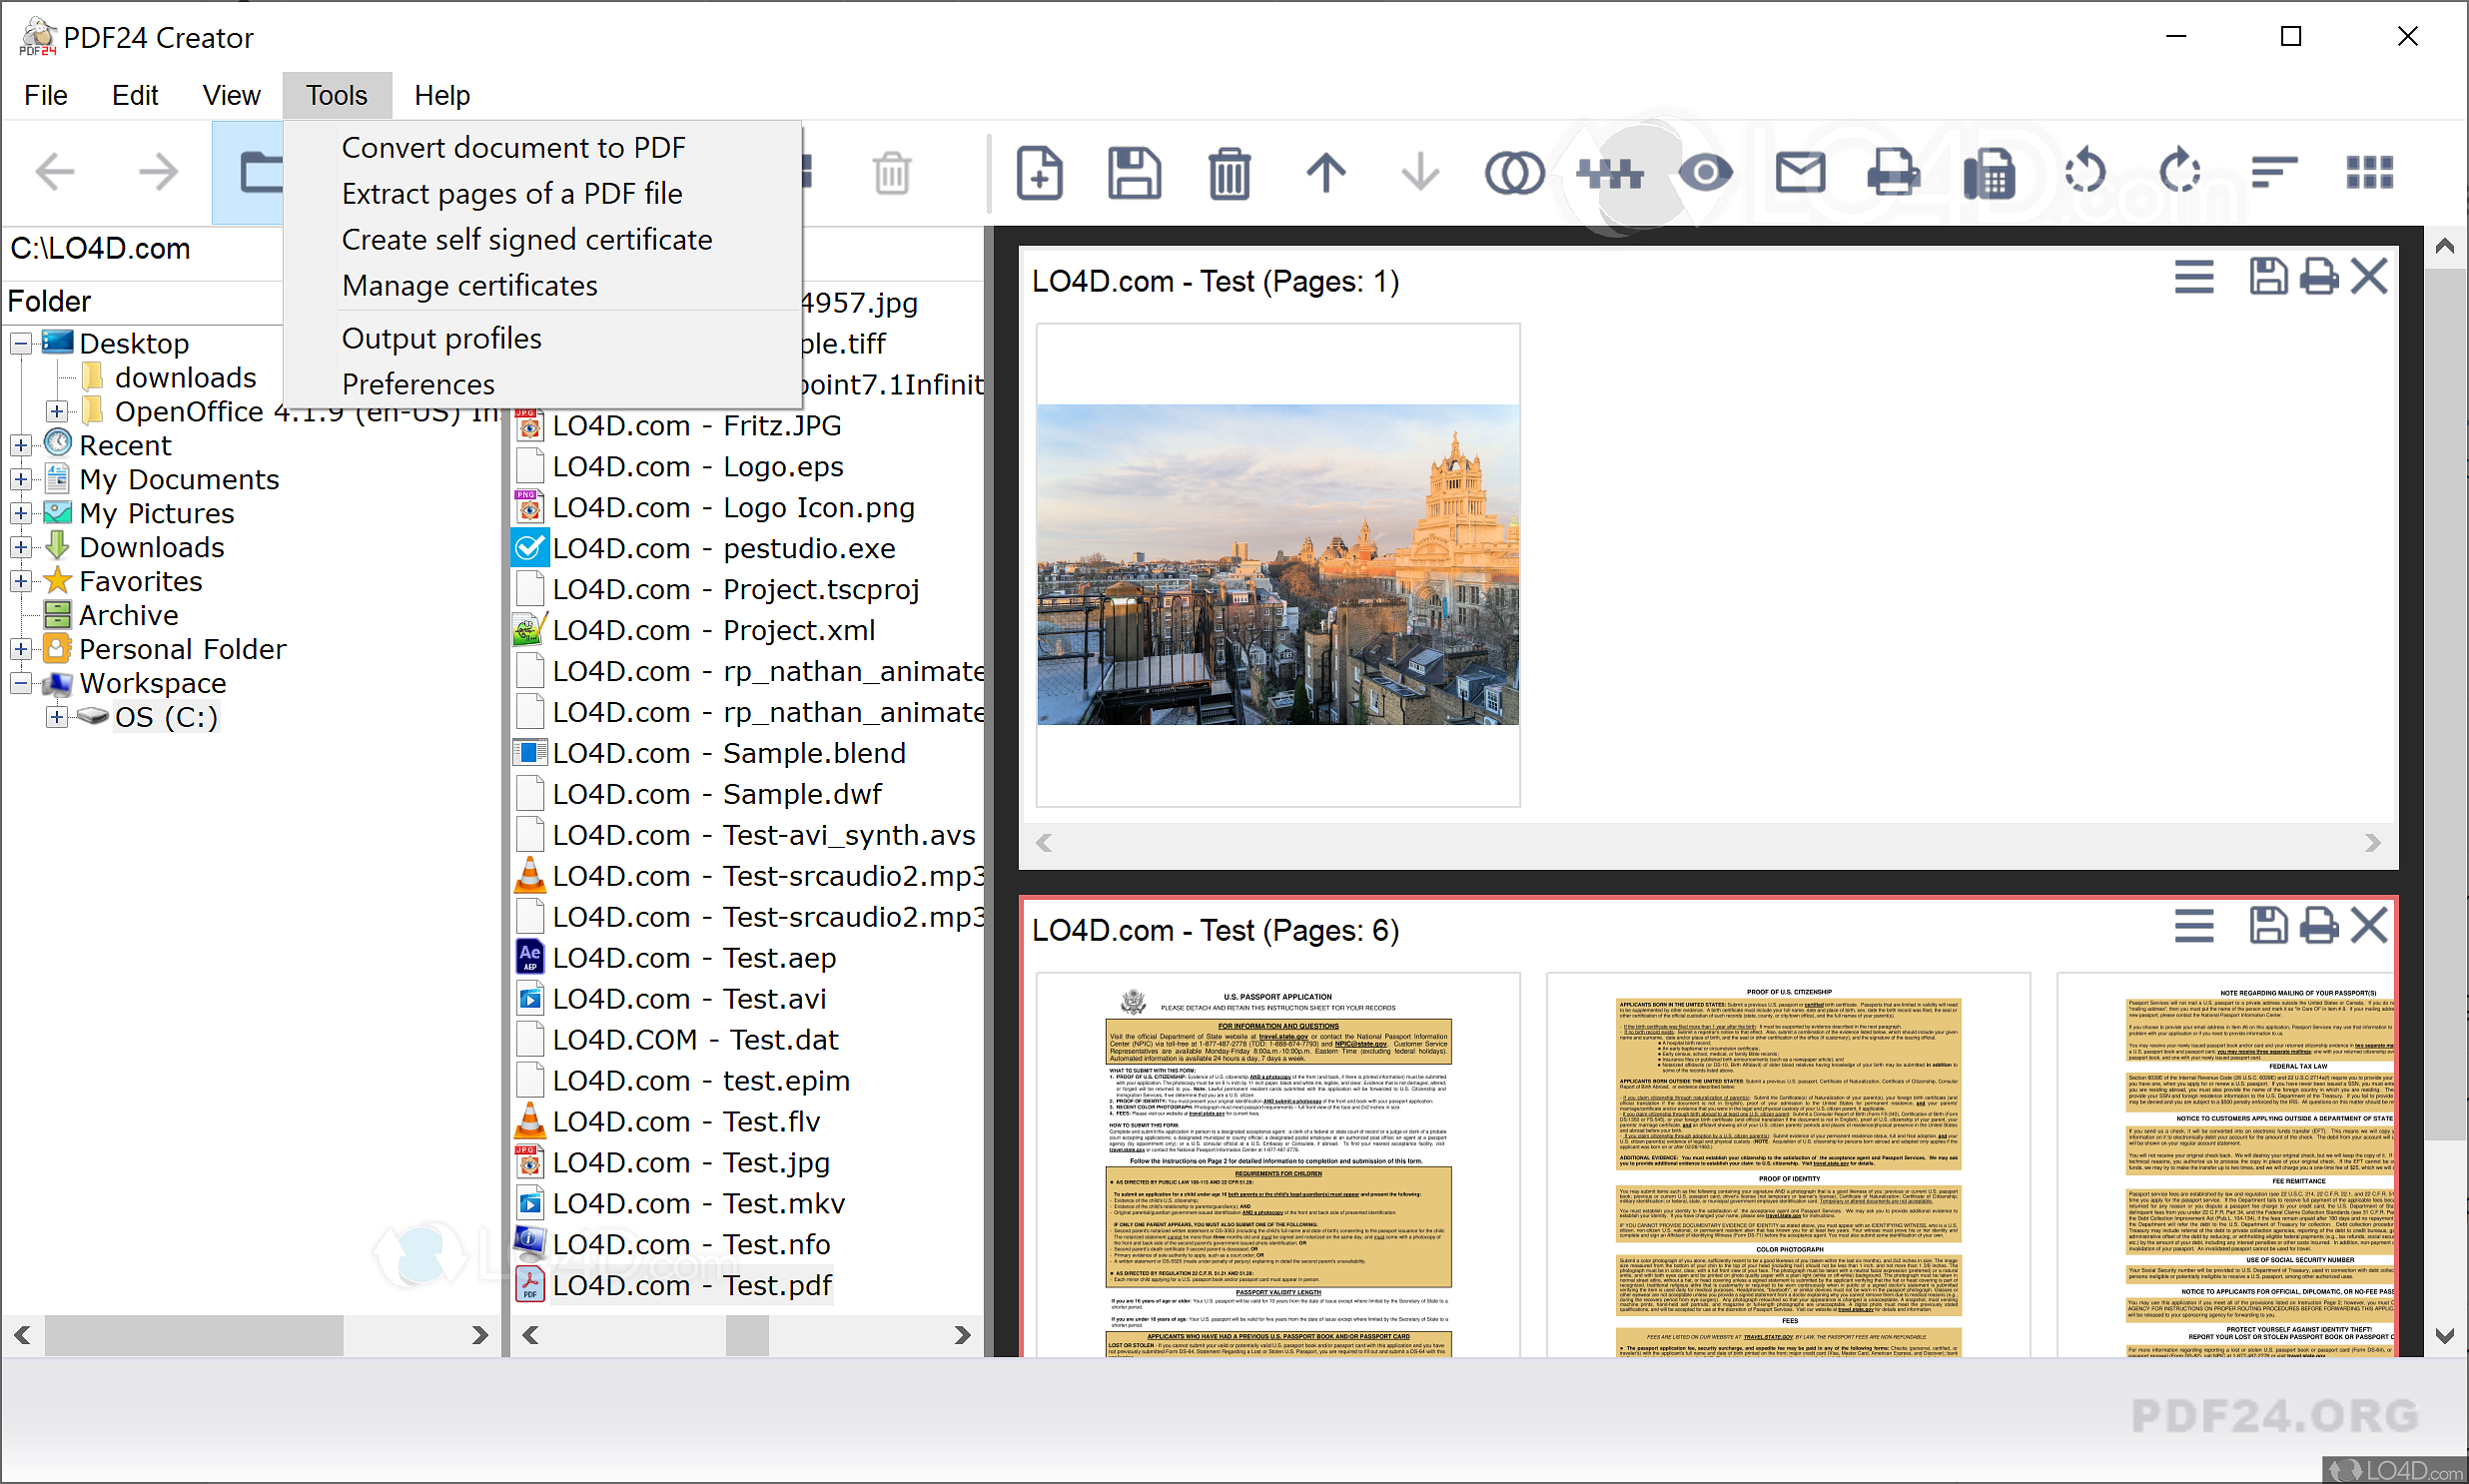 instal the new for windows PDF24 Creator 11.13